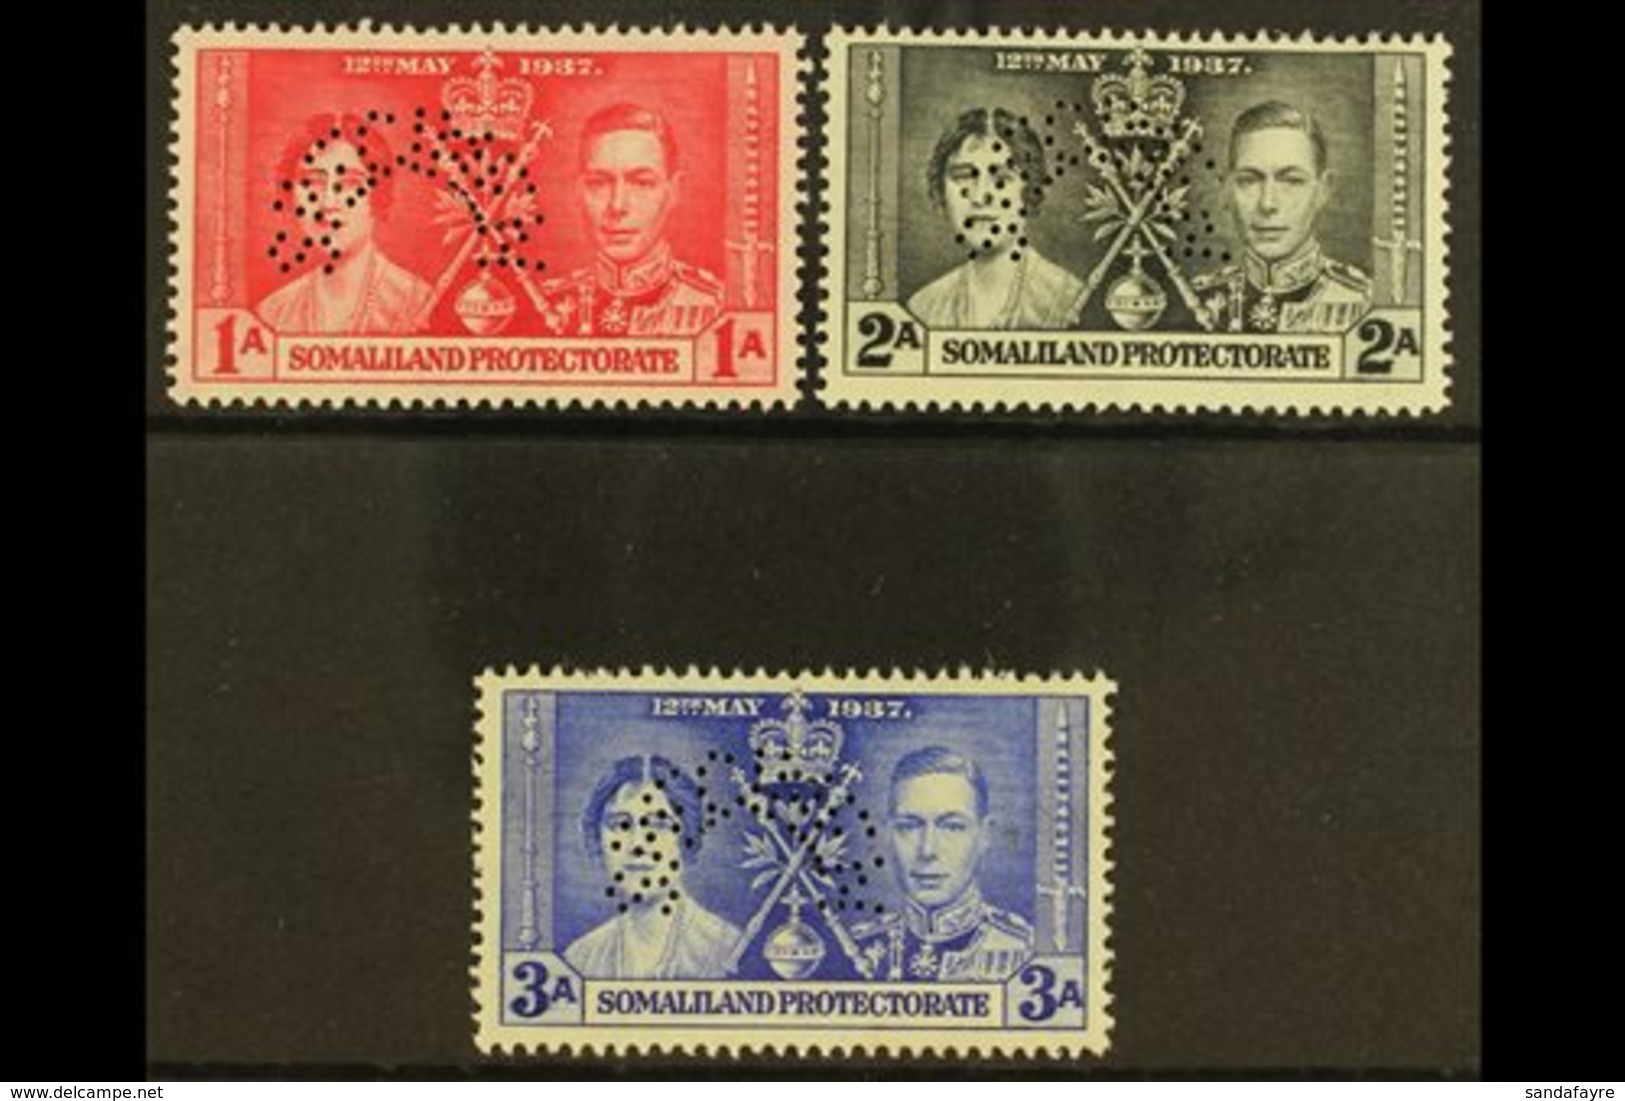 1937 Coronation Set Complete, Perforated "Specimen", SG 90s/92s, Very Fine Mint Part Og. (3 Stamps) For More Images, Ple - Somaliland (Herrschaft ...-1959)